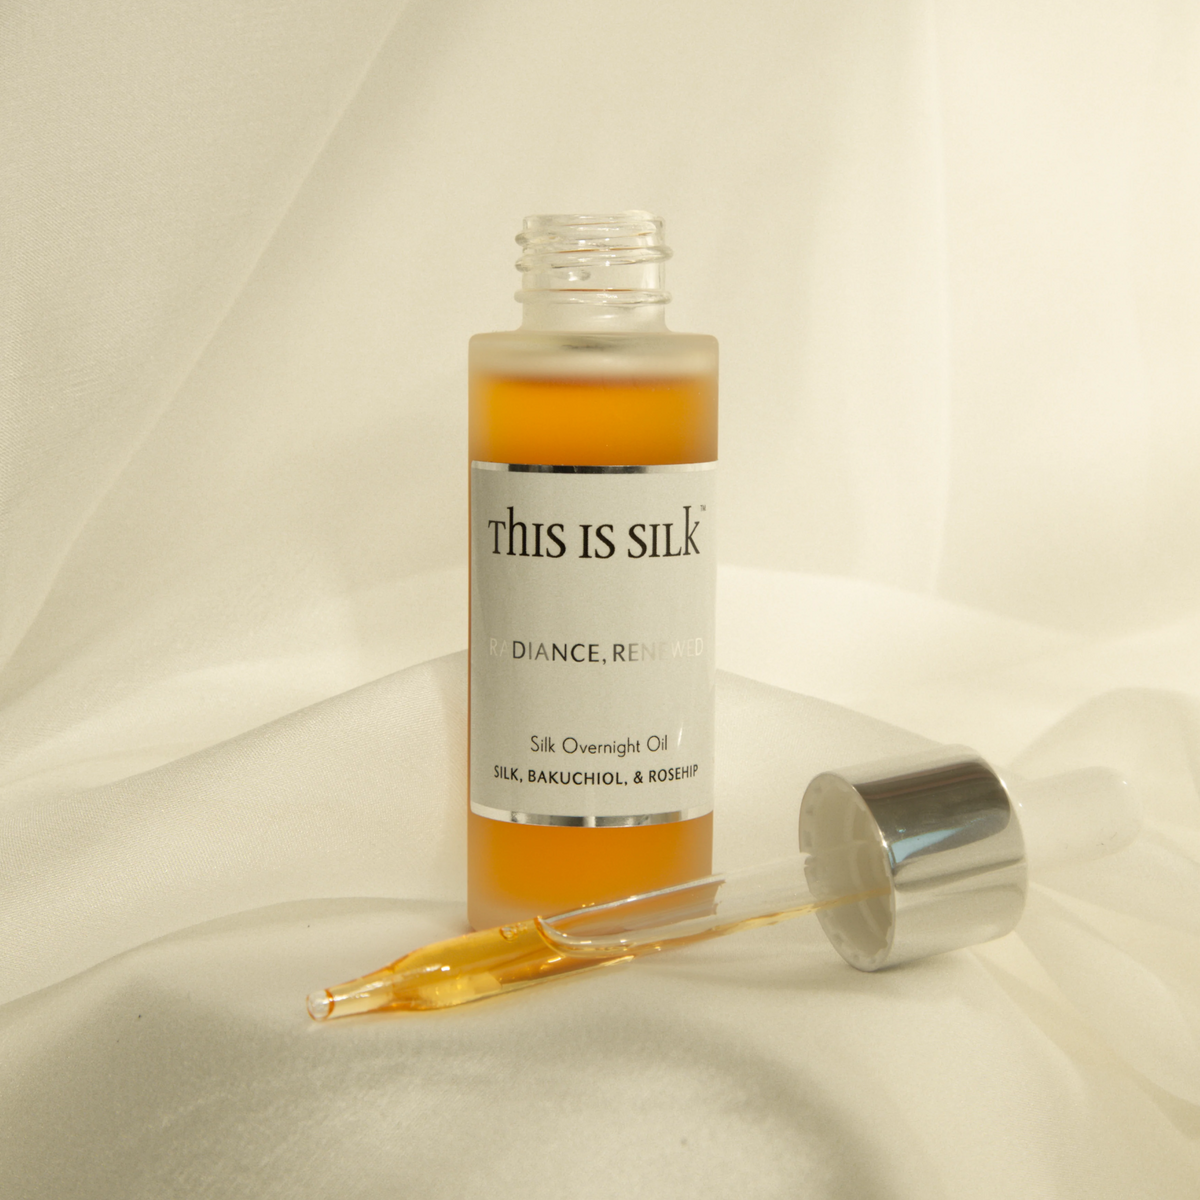 &#39;Radiance Renewed&#39; Silk Overnight Oil with Silk, Bakuchiol &amp; Rosehip (30 ml)